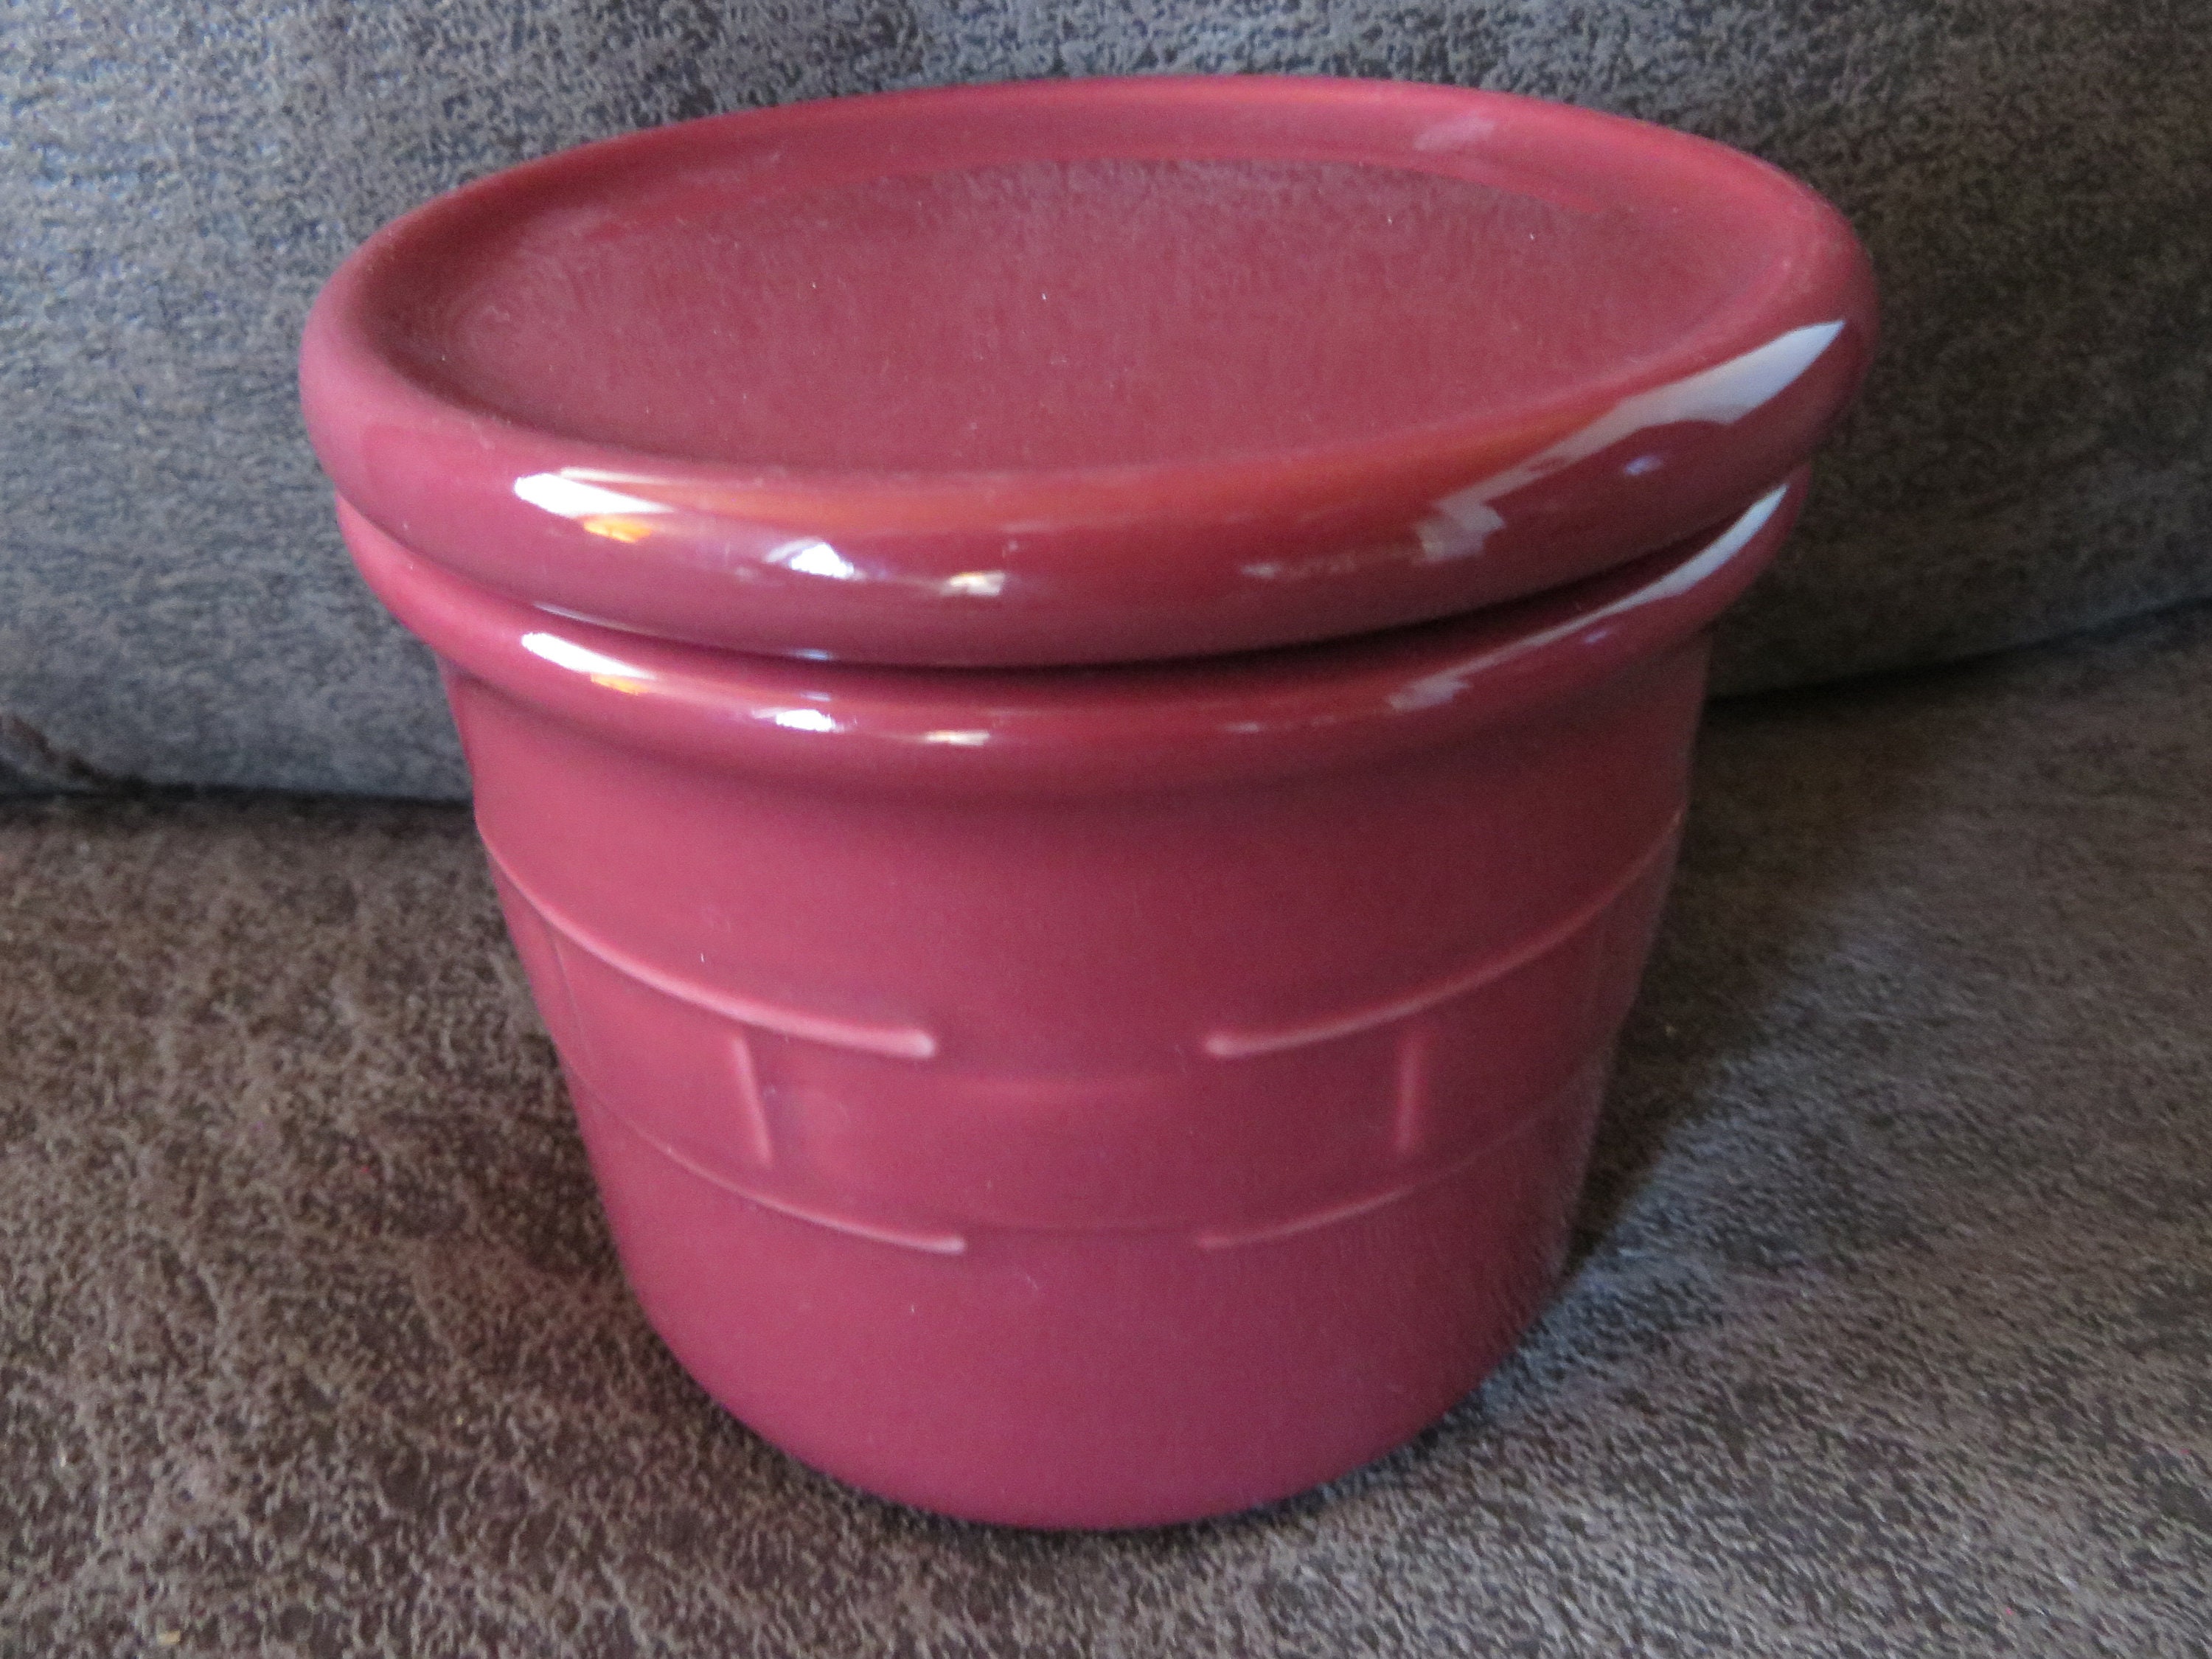 Longaberger Pottery Crock With Paprika Red 